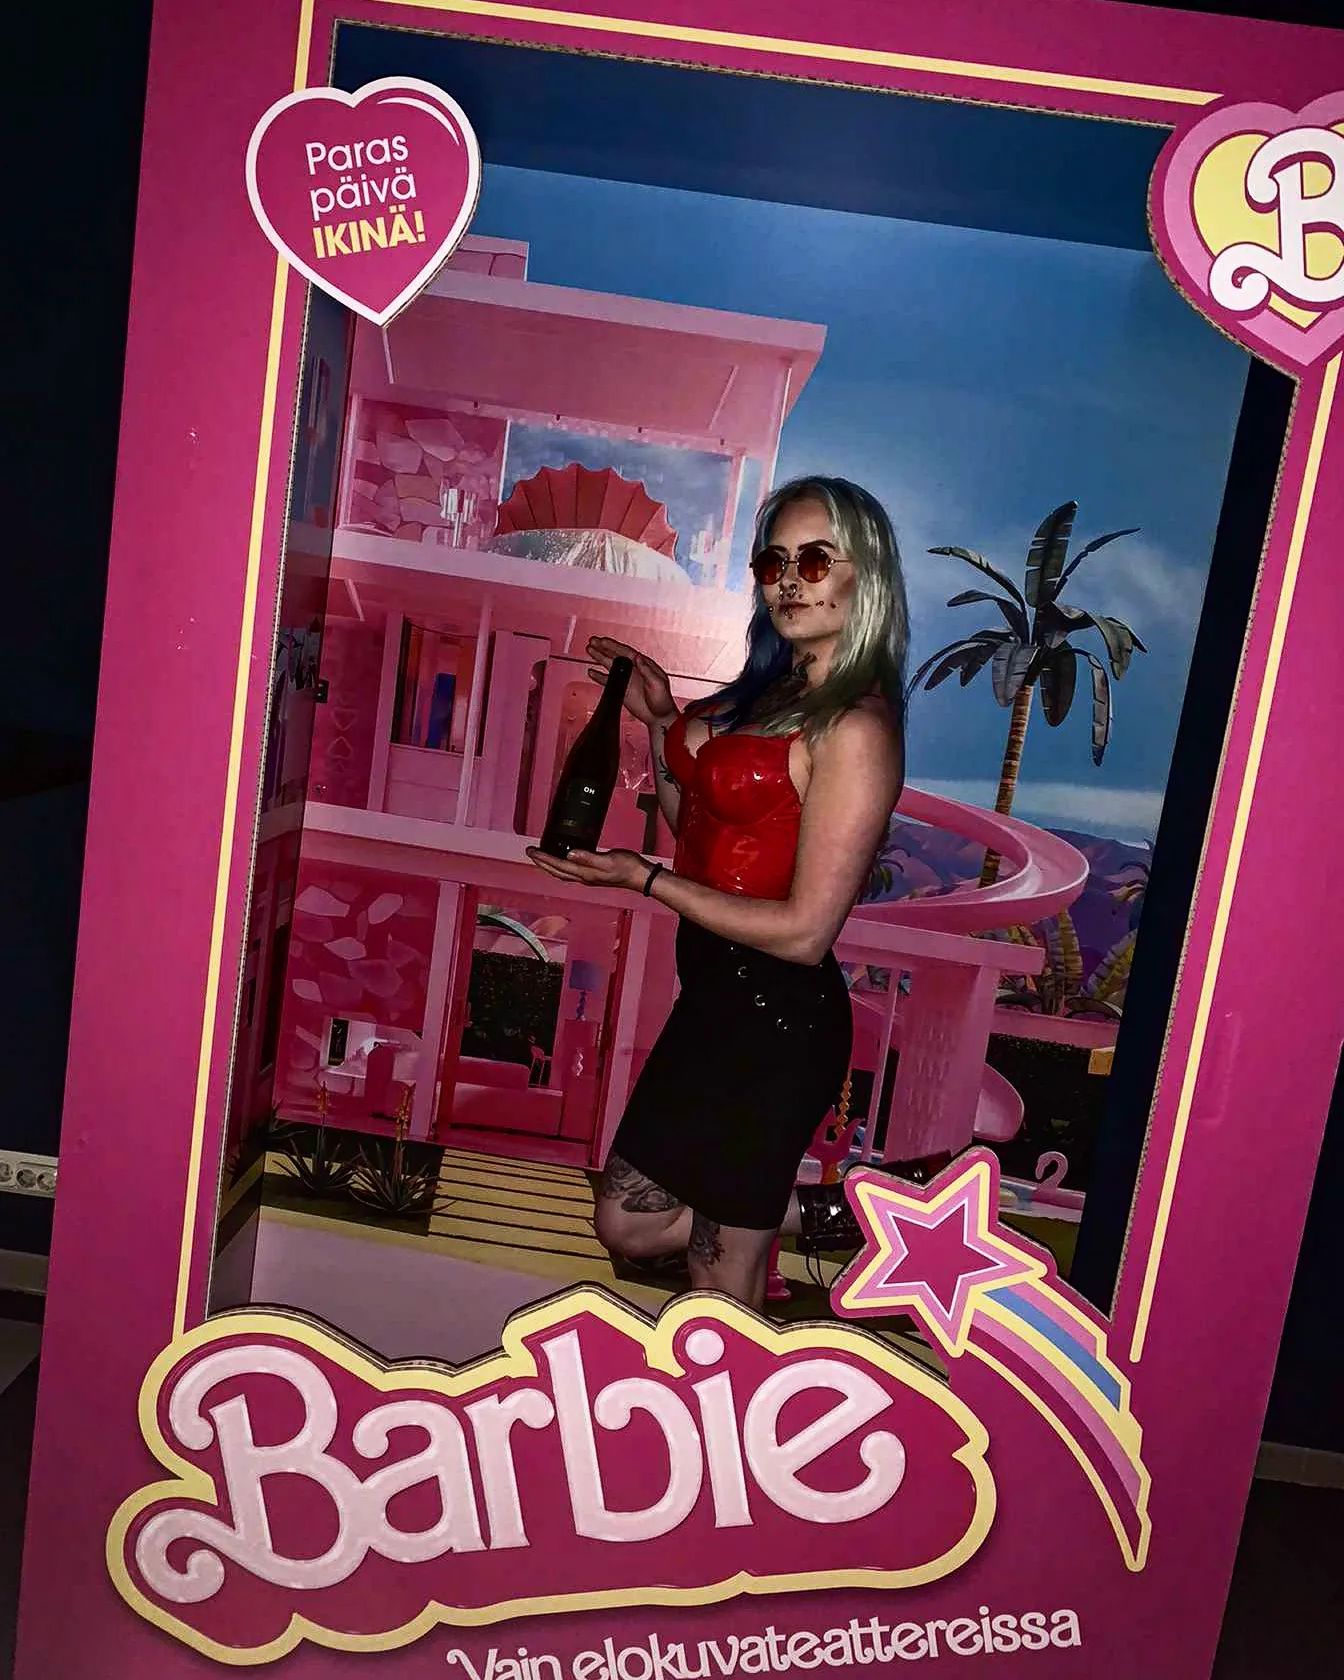 *This Barbie is an alcoholic*
×
#barbie #finnishwoman #finnishbarbie #movie #dollphotography #doll